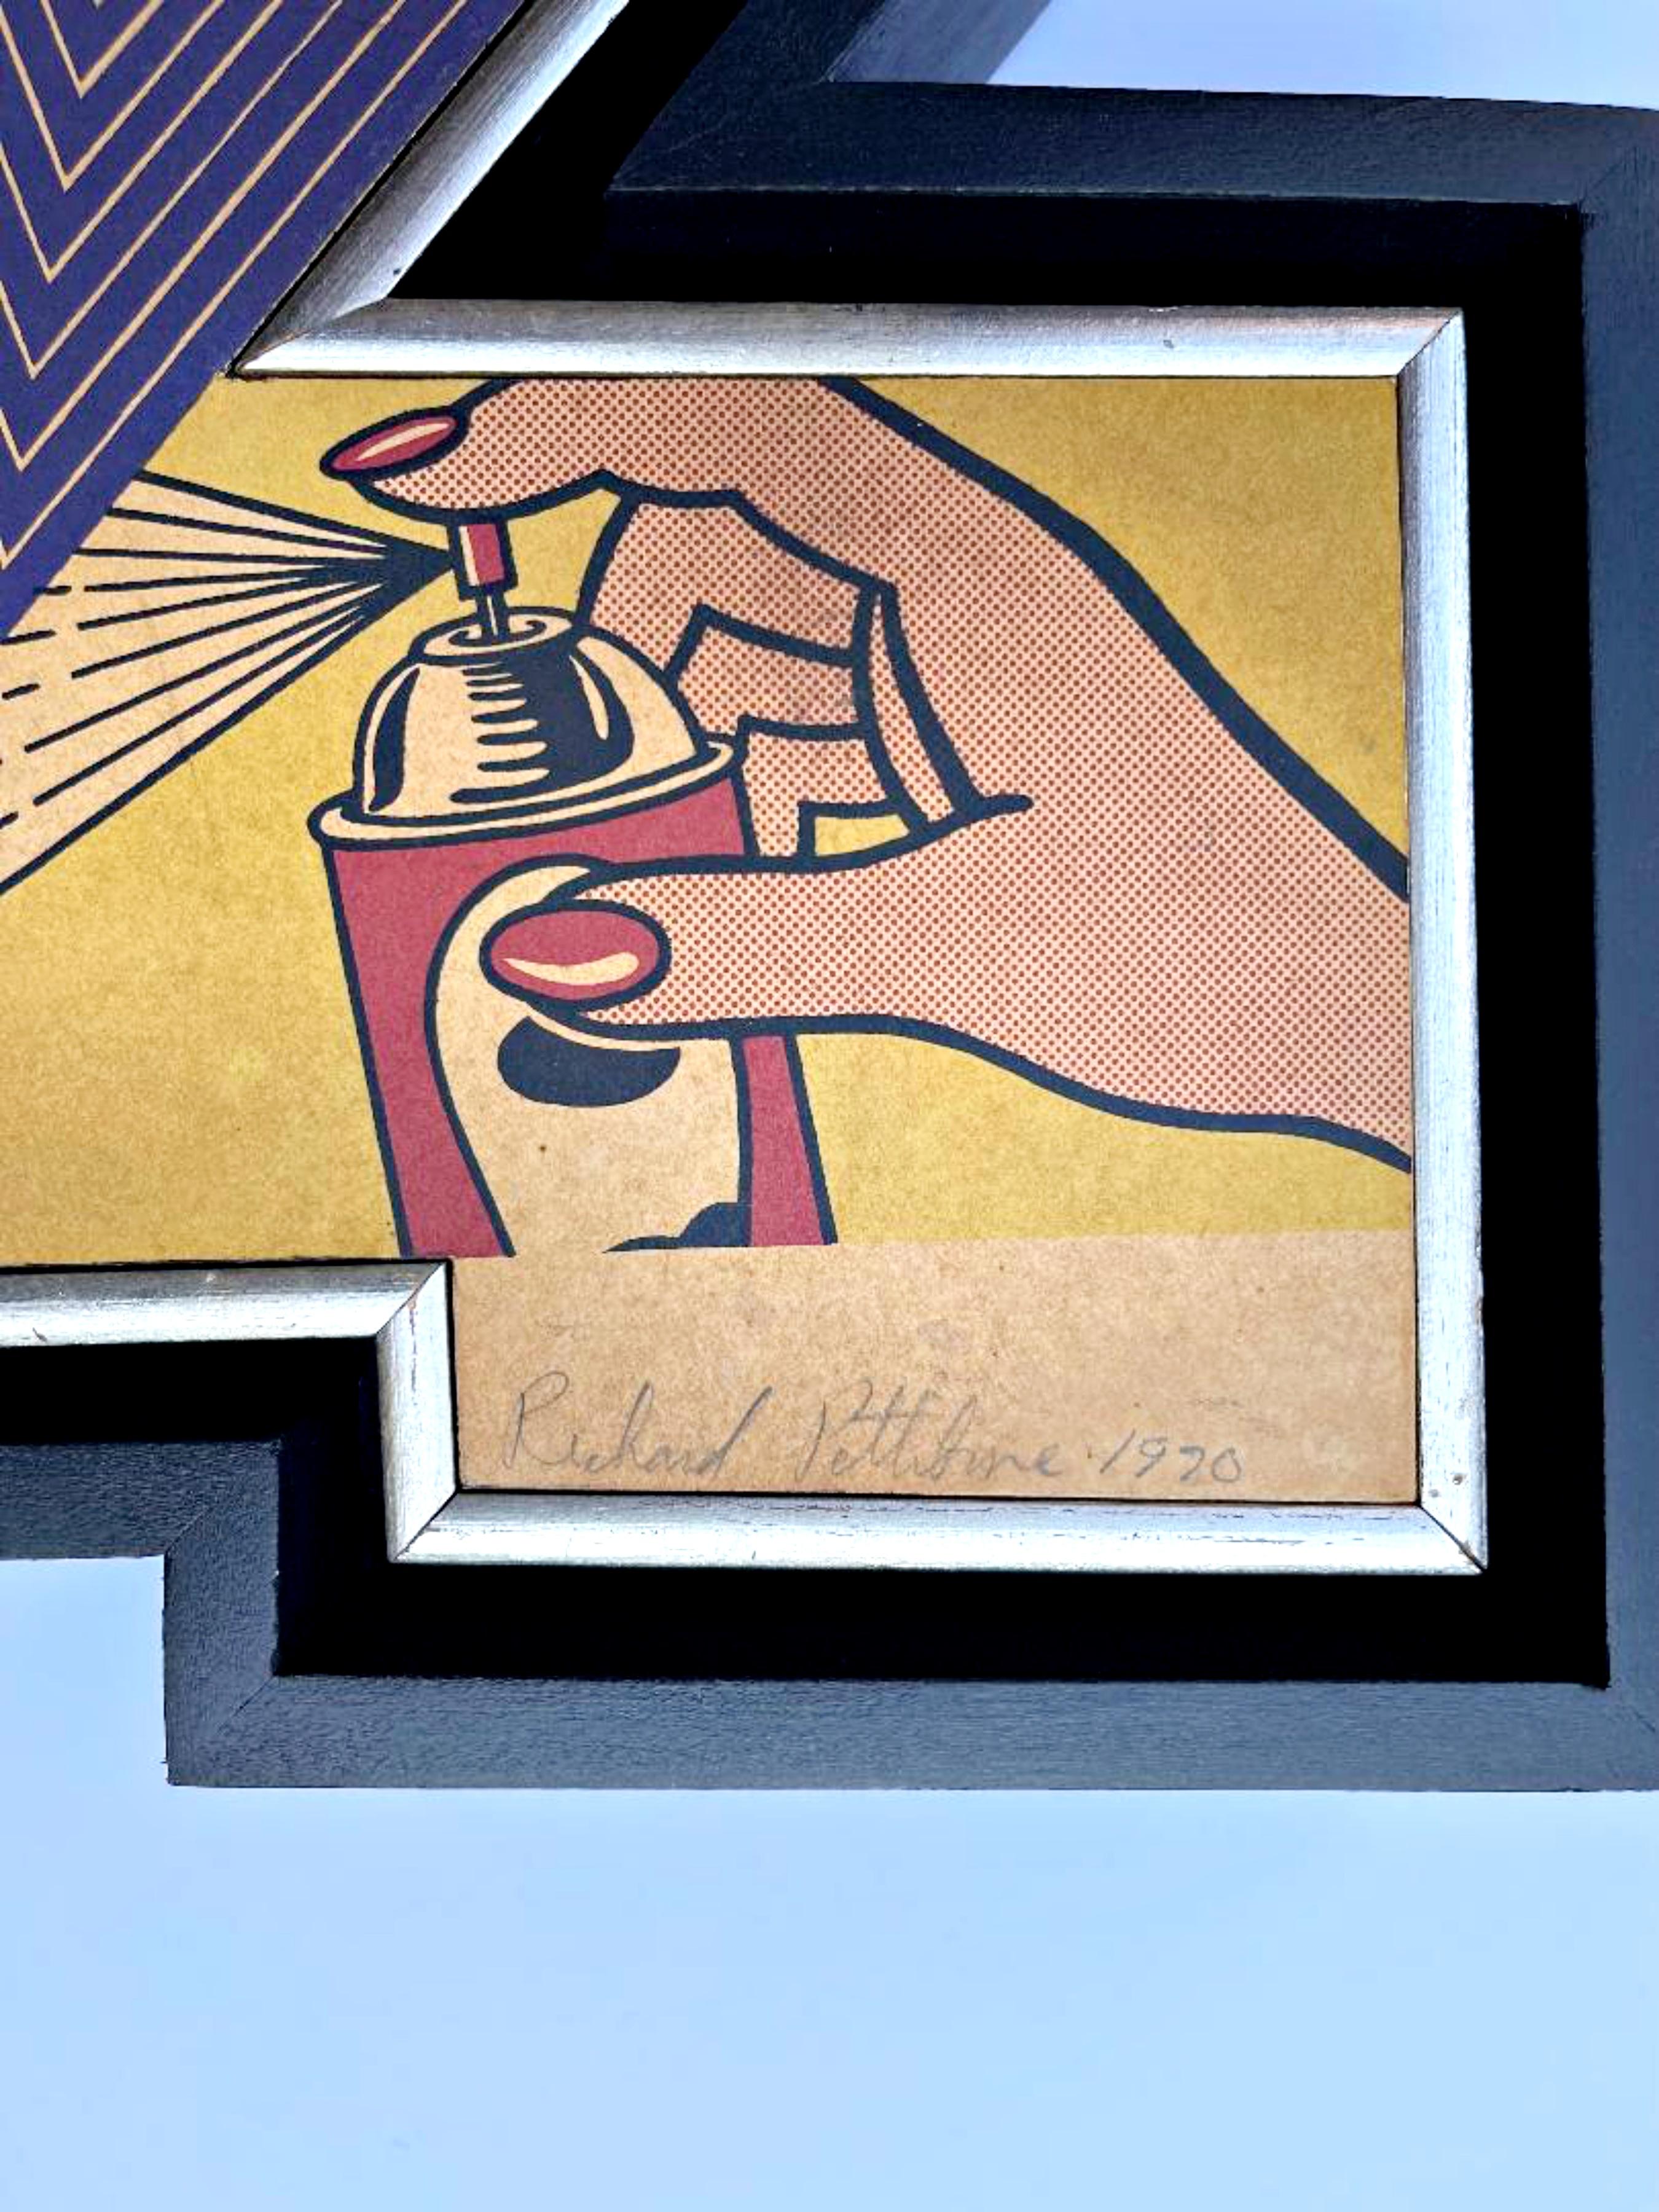 Pièce d'appréciation : Andy Warhol, Frank Stella, Roy Lichtenstein Unique var. - Pop Art Mixed Media Art par Richard Pettibone